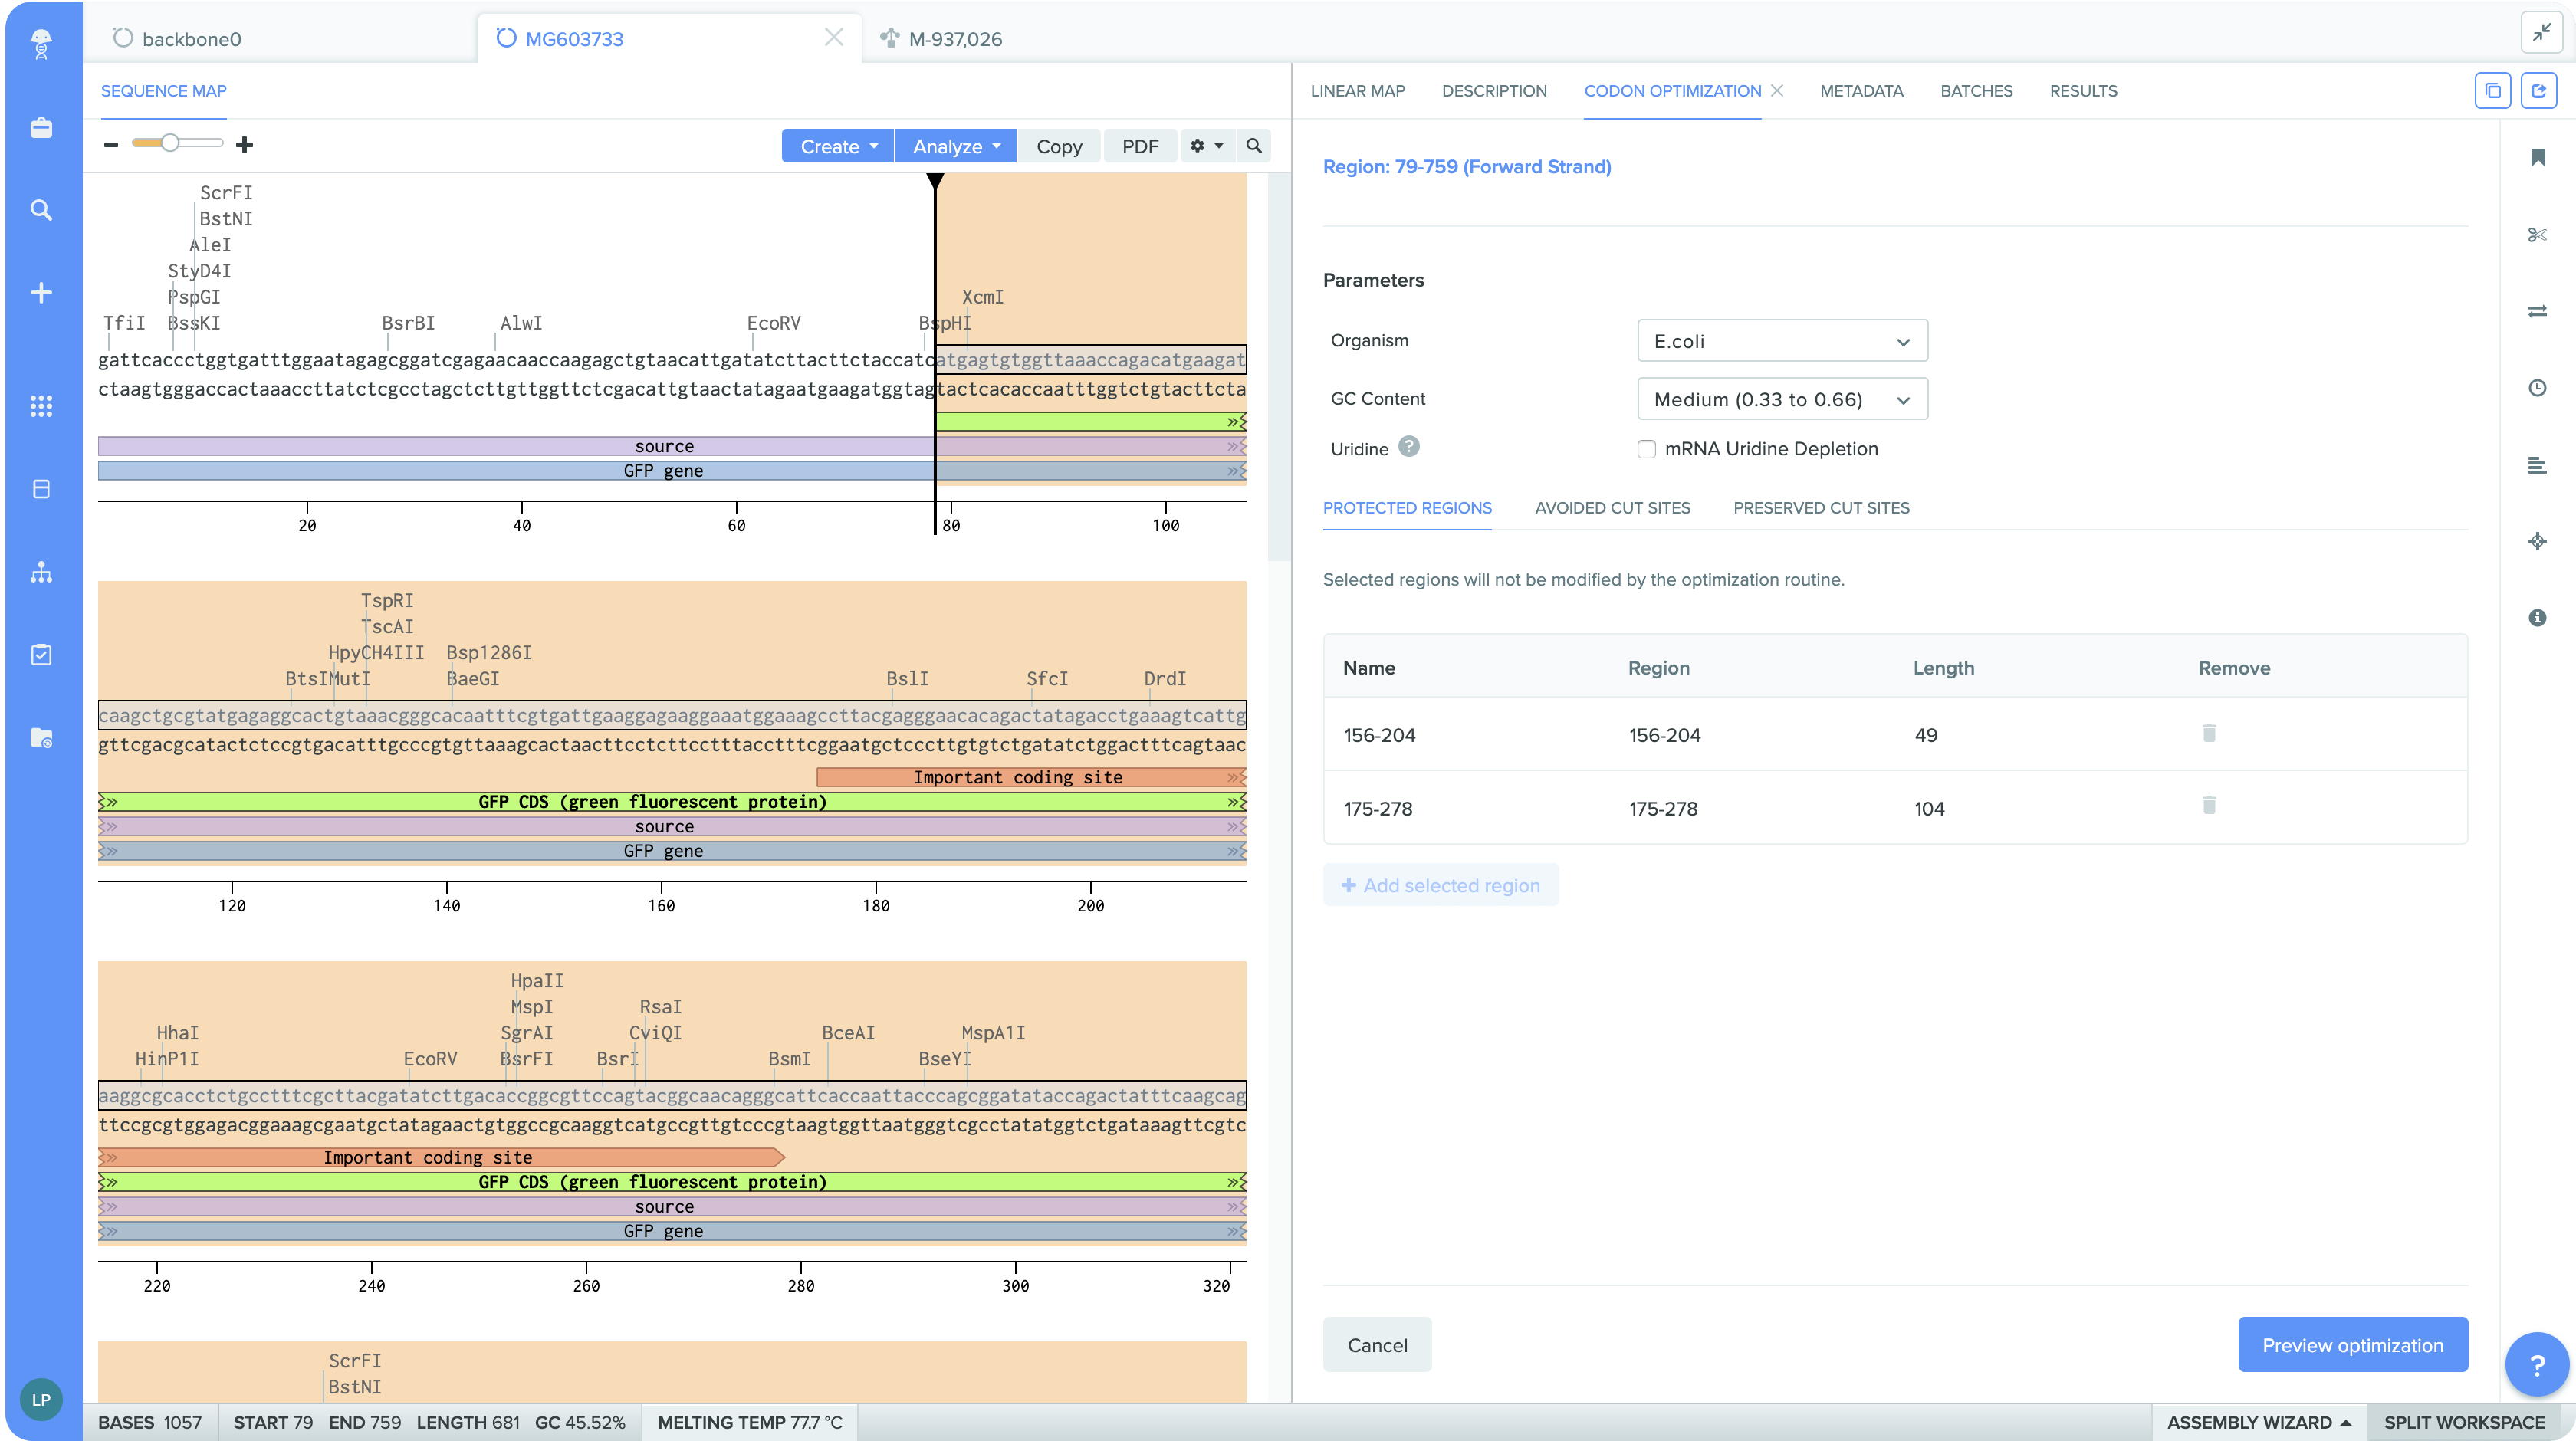 Codon-Optimization-Screenshot-1.png